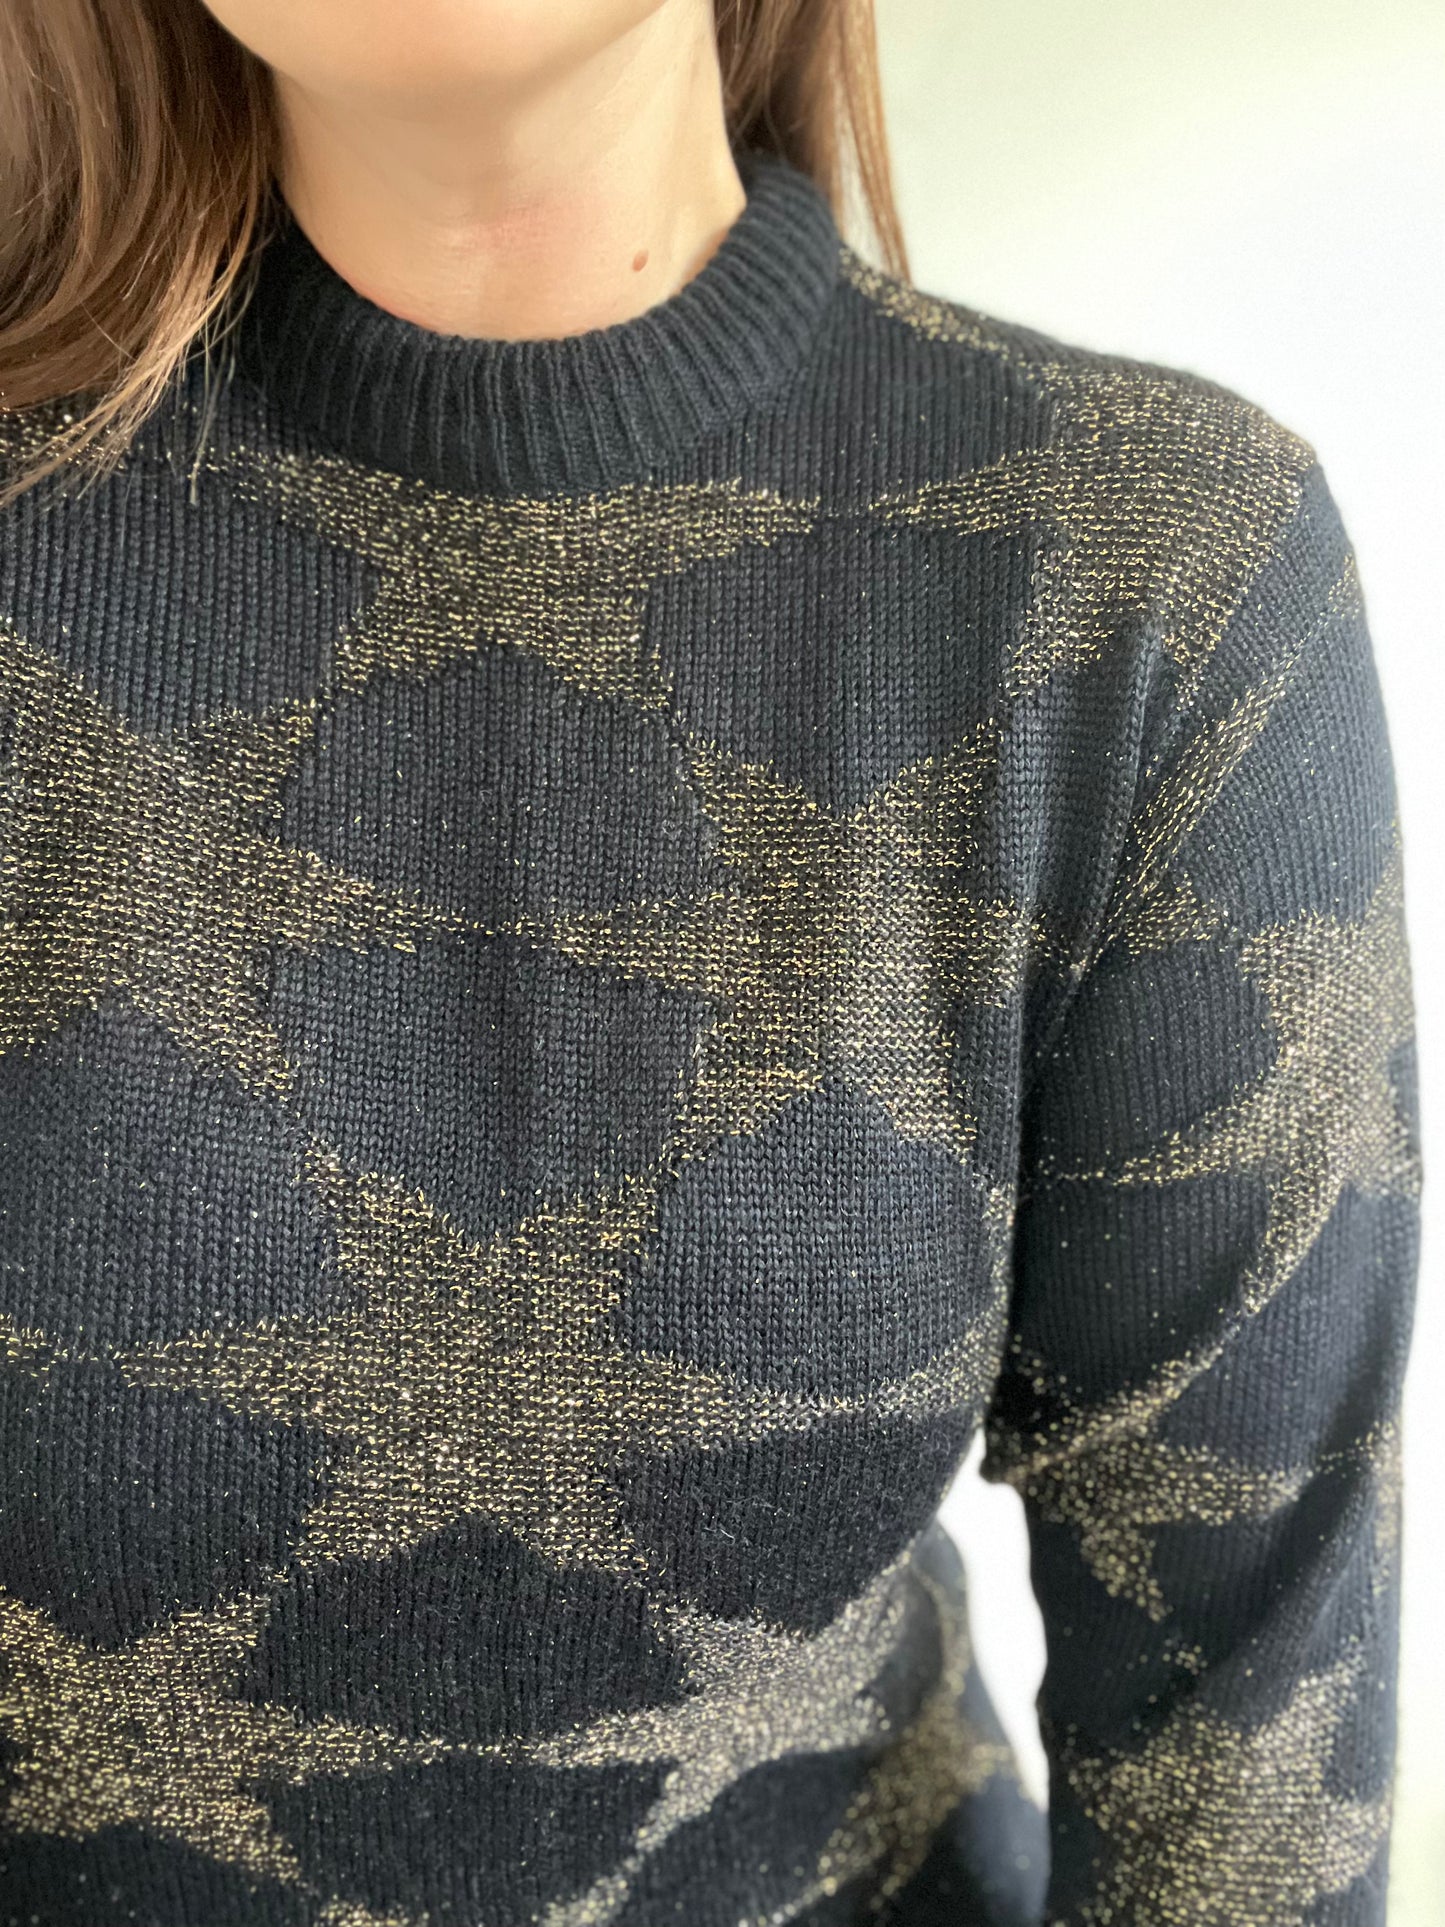 Gold Metallic Stars Sweater - XS/S